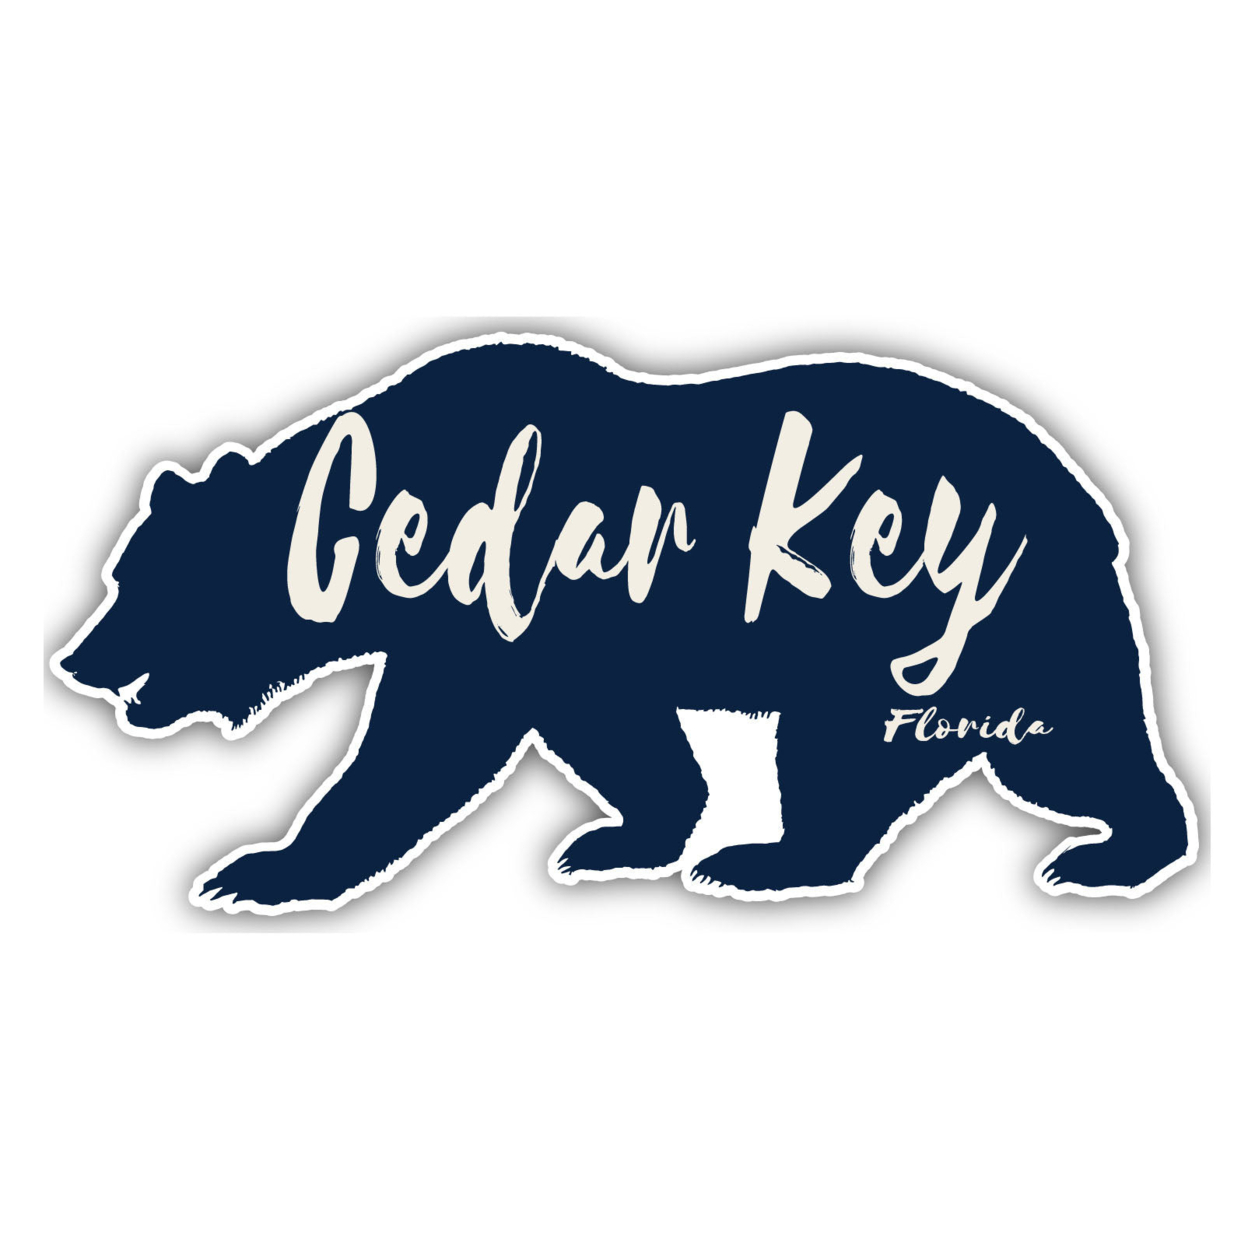 Cedar Key Florida Souvenir Decorative Stickers (Choose Theme And Size) - Single Unit, 10-Inch, Camp Life